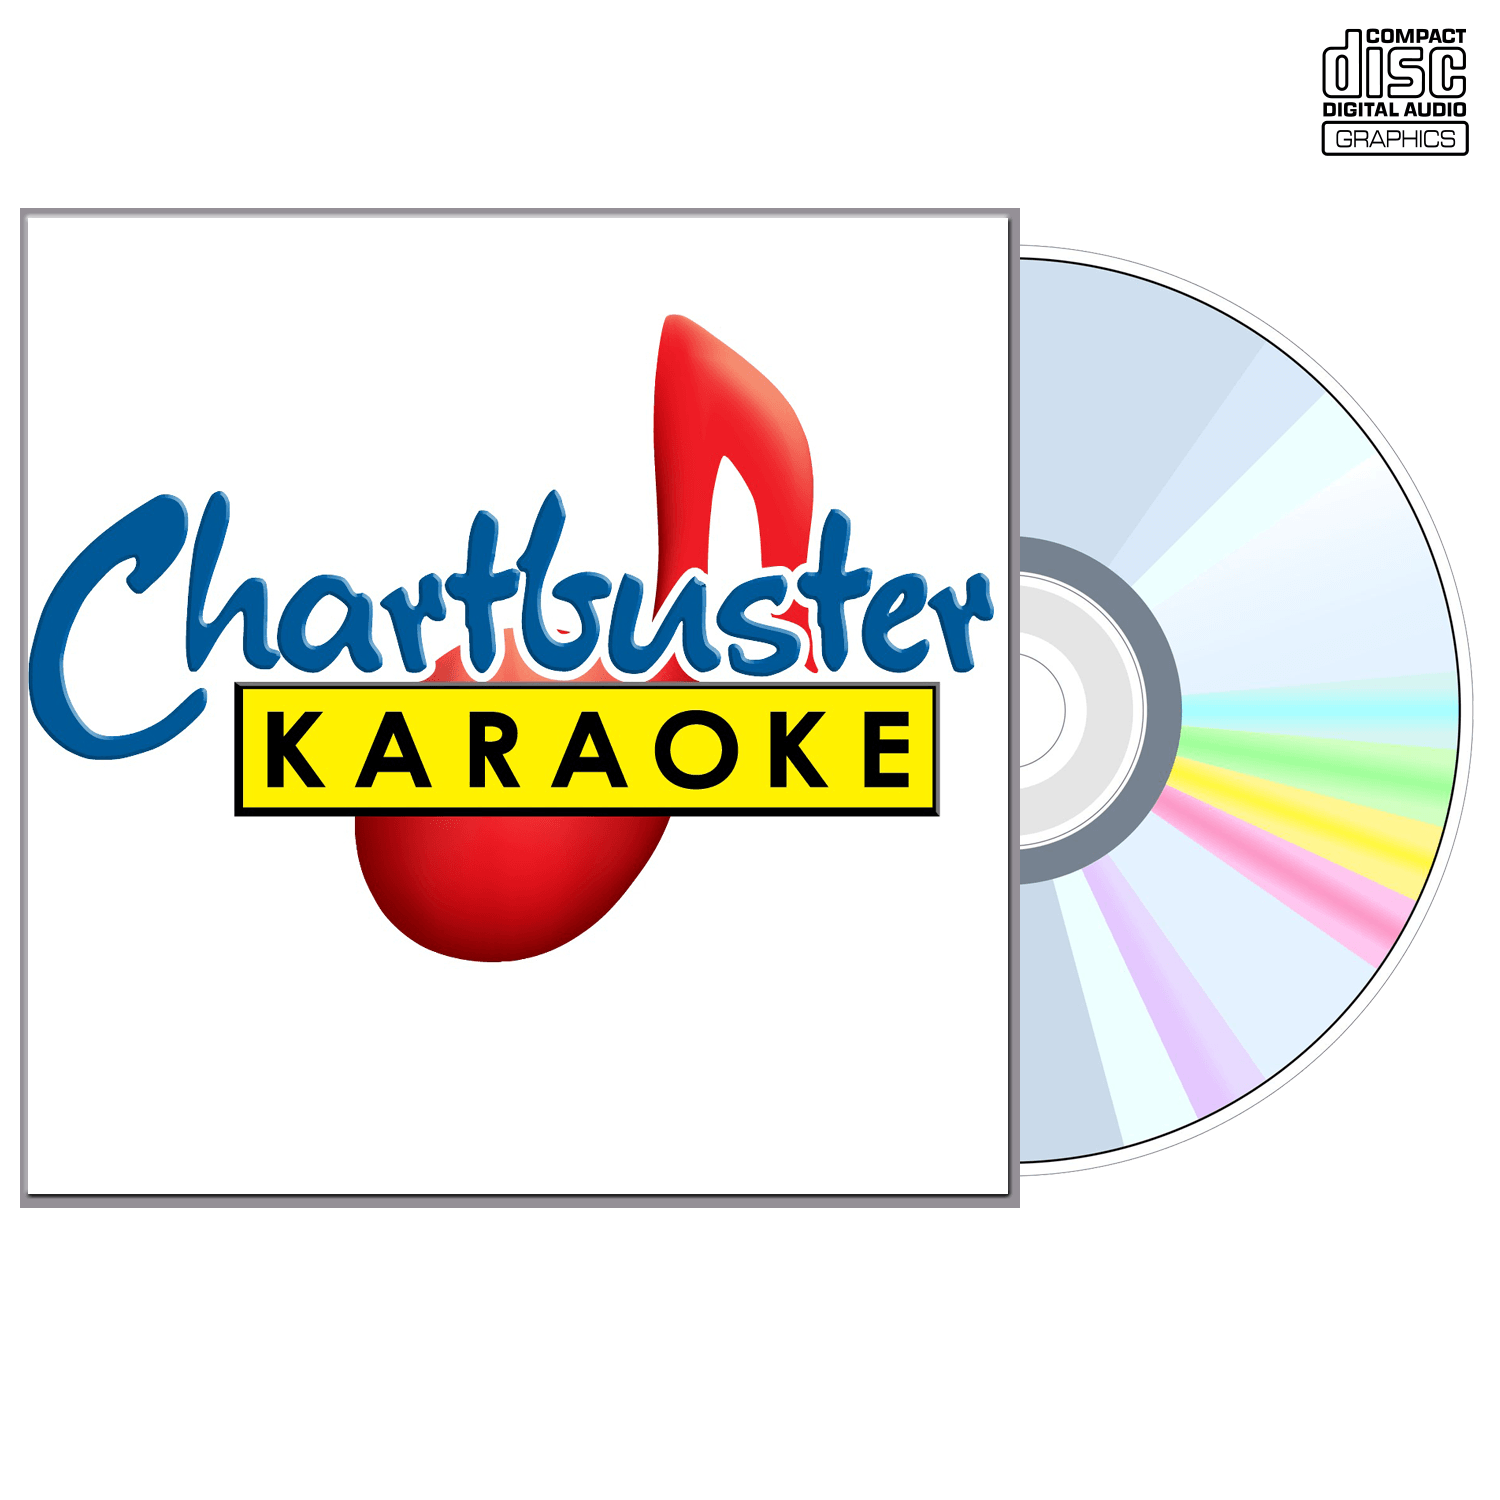 Best Loved Duets Vol 1 - CD+G - Chartbuster Karaoke - Karaoke Home Entertainment